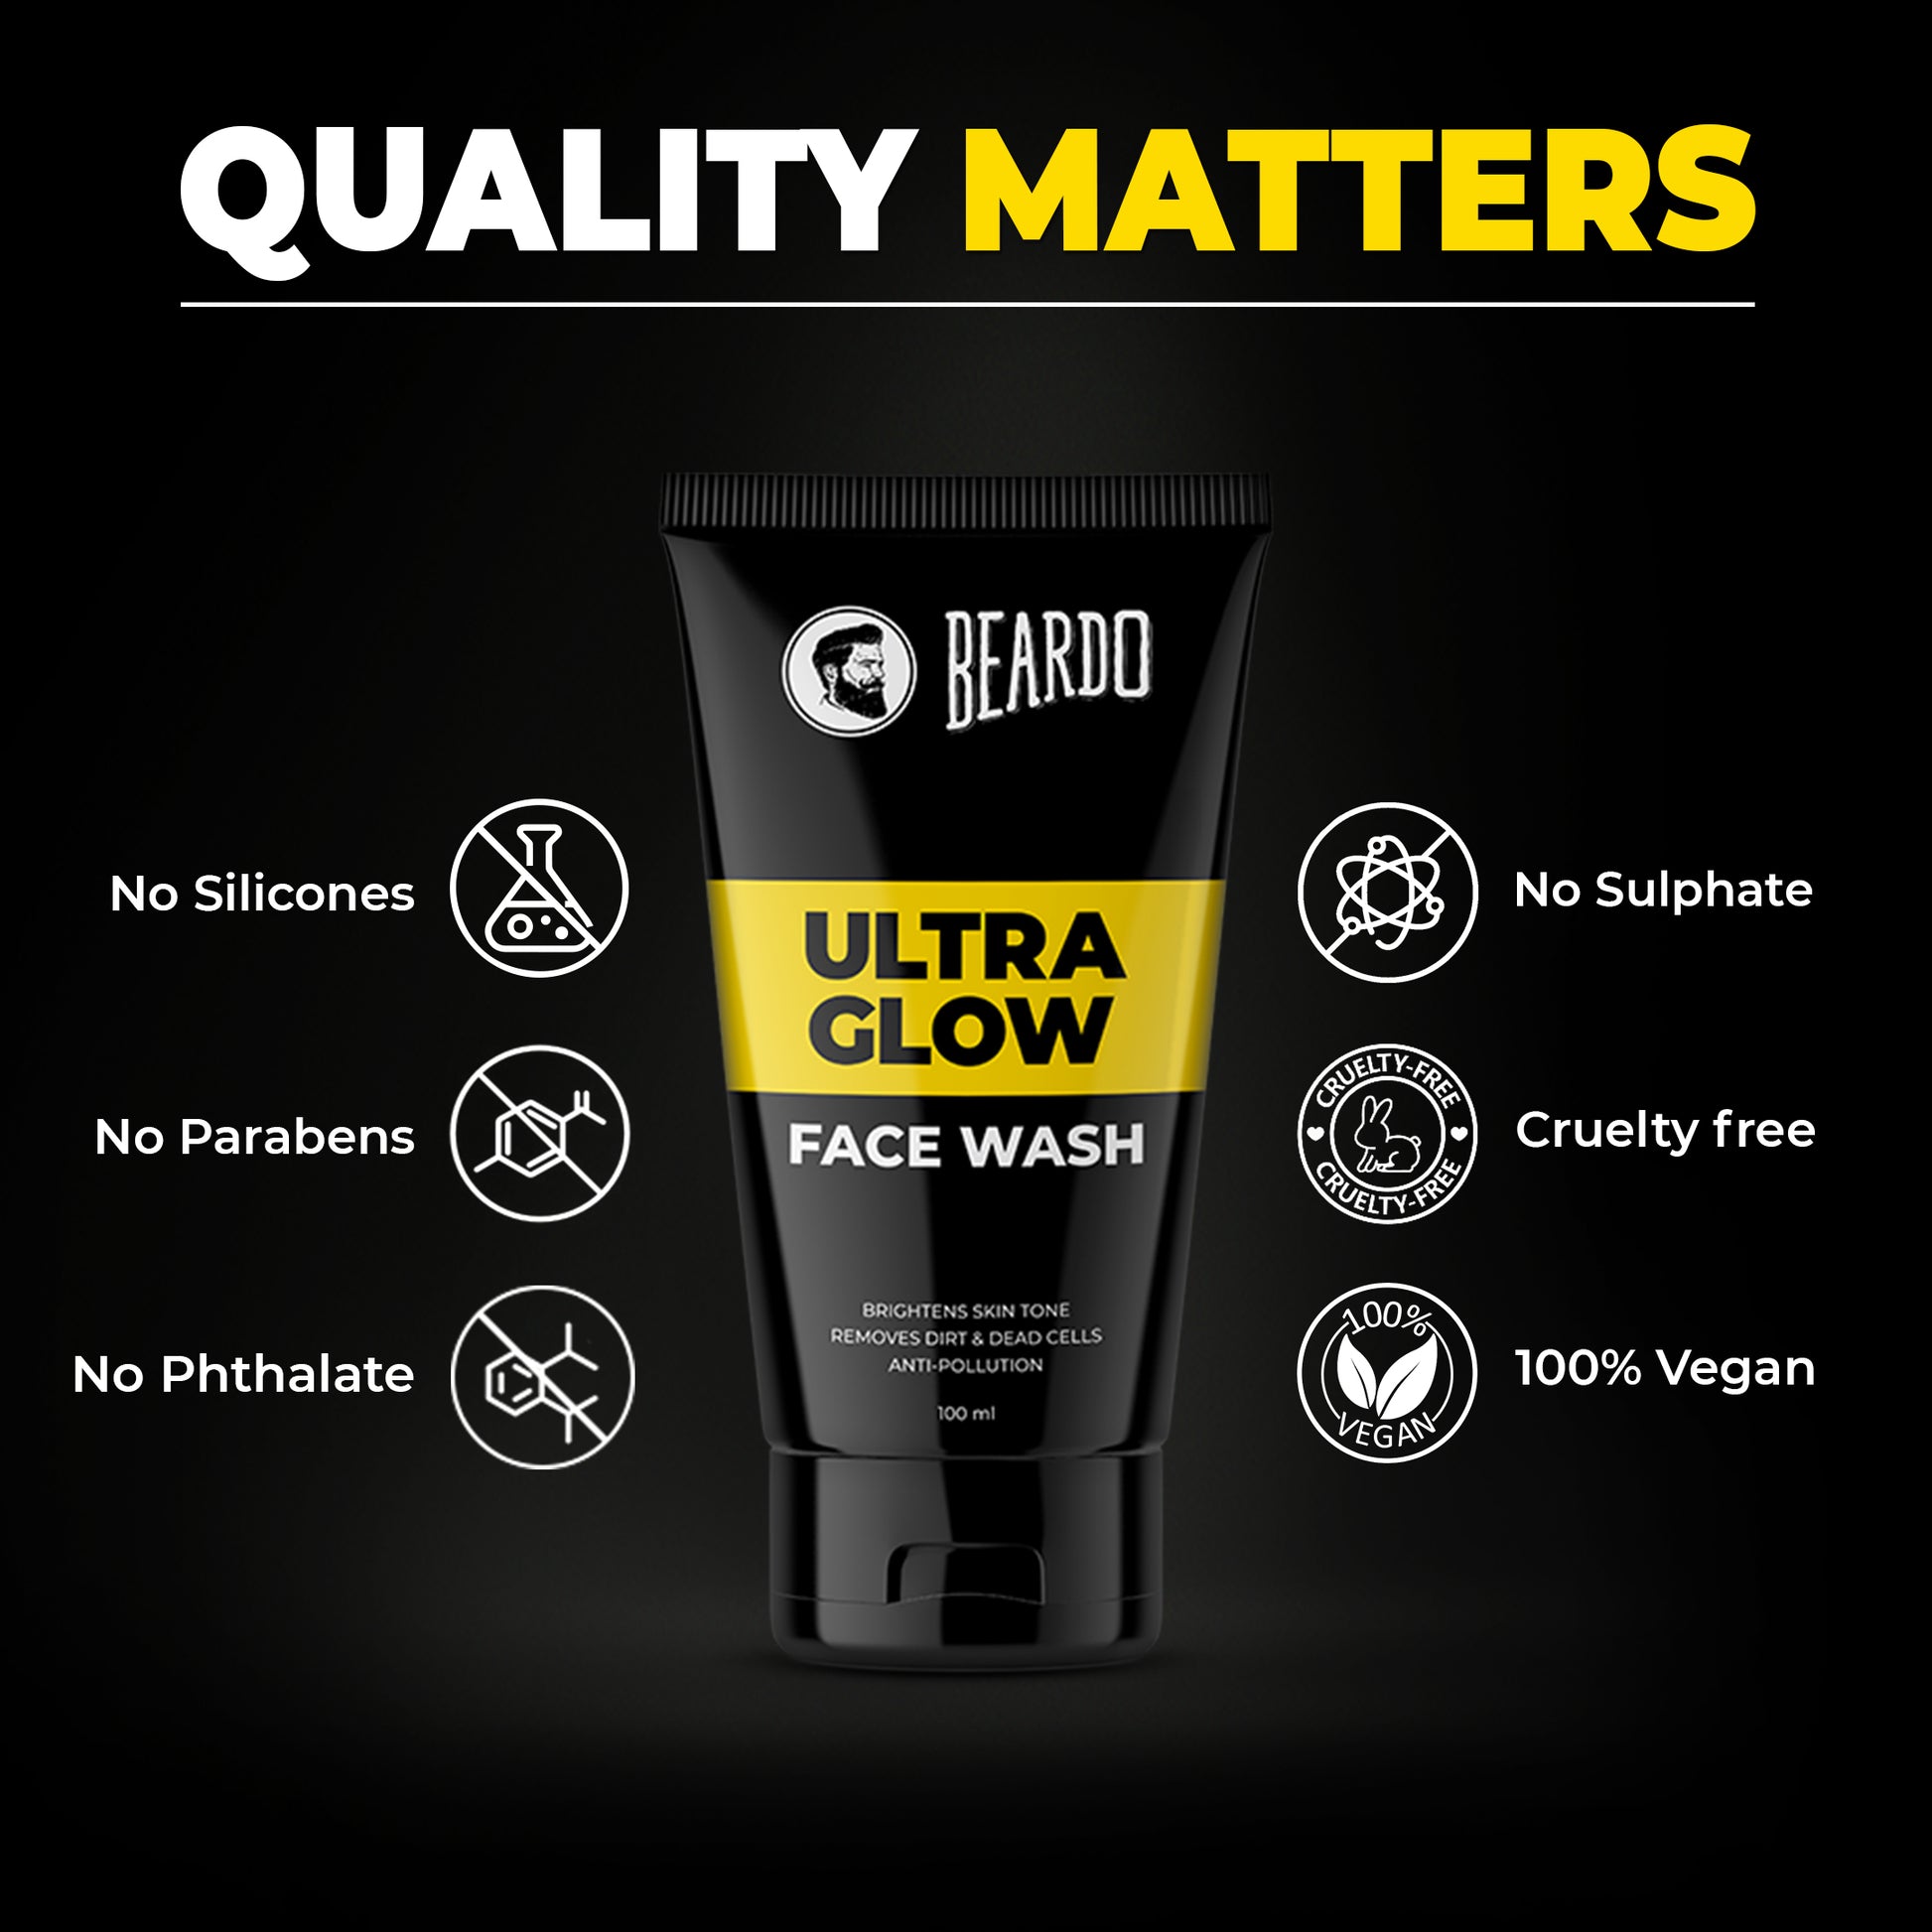  Is Beardo face wash chemical free?